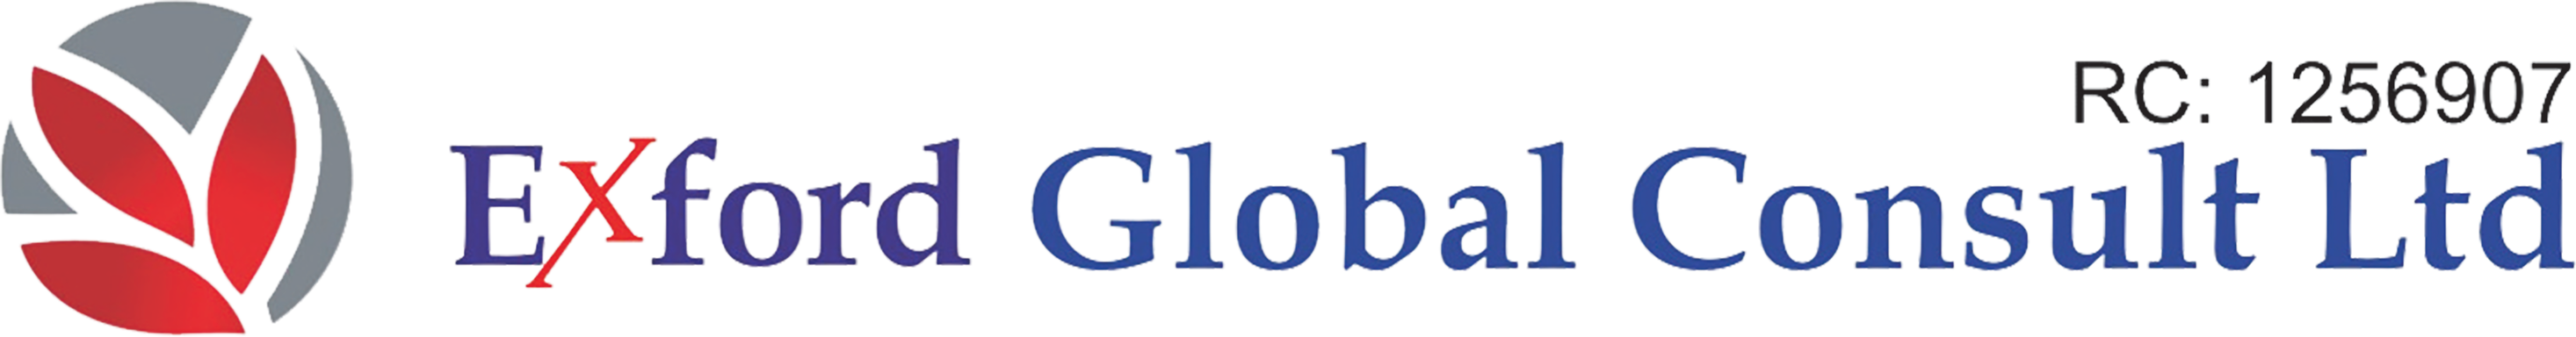 Exford Global Consult Ltd